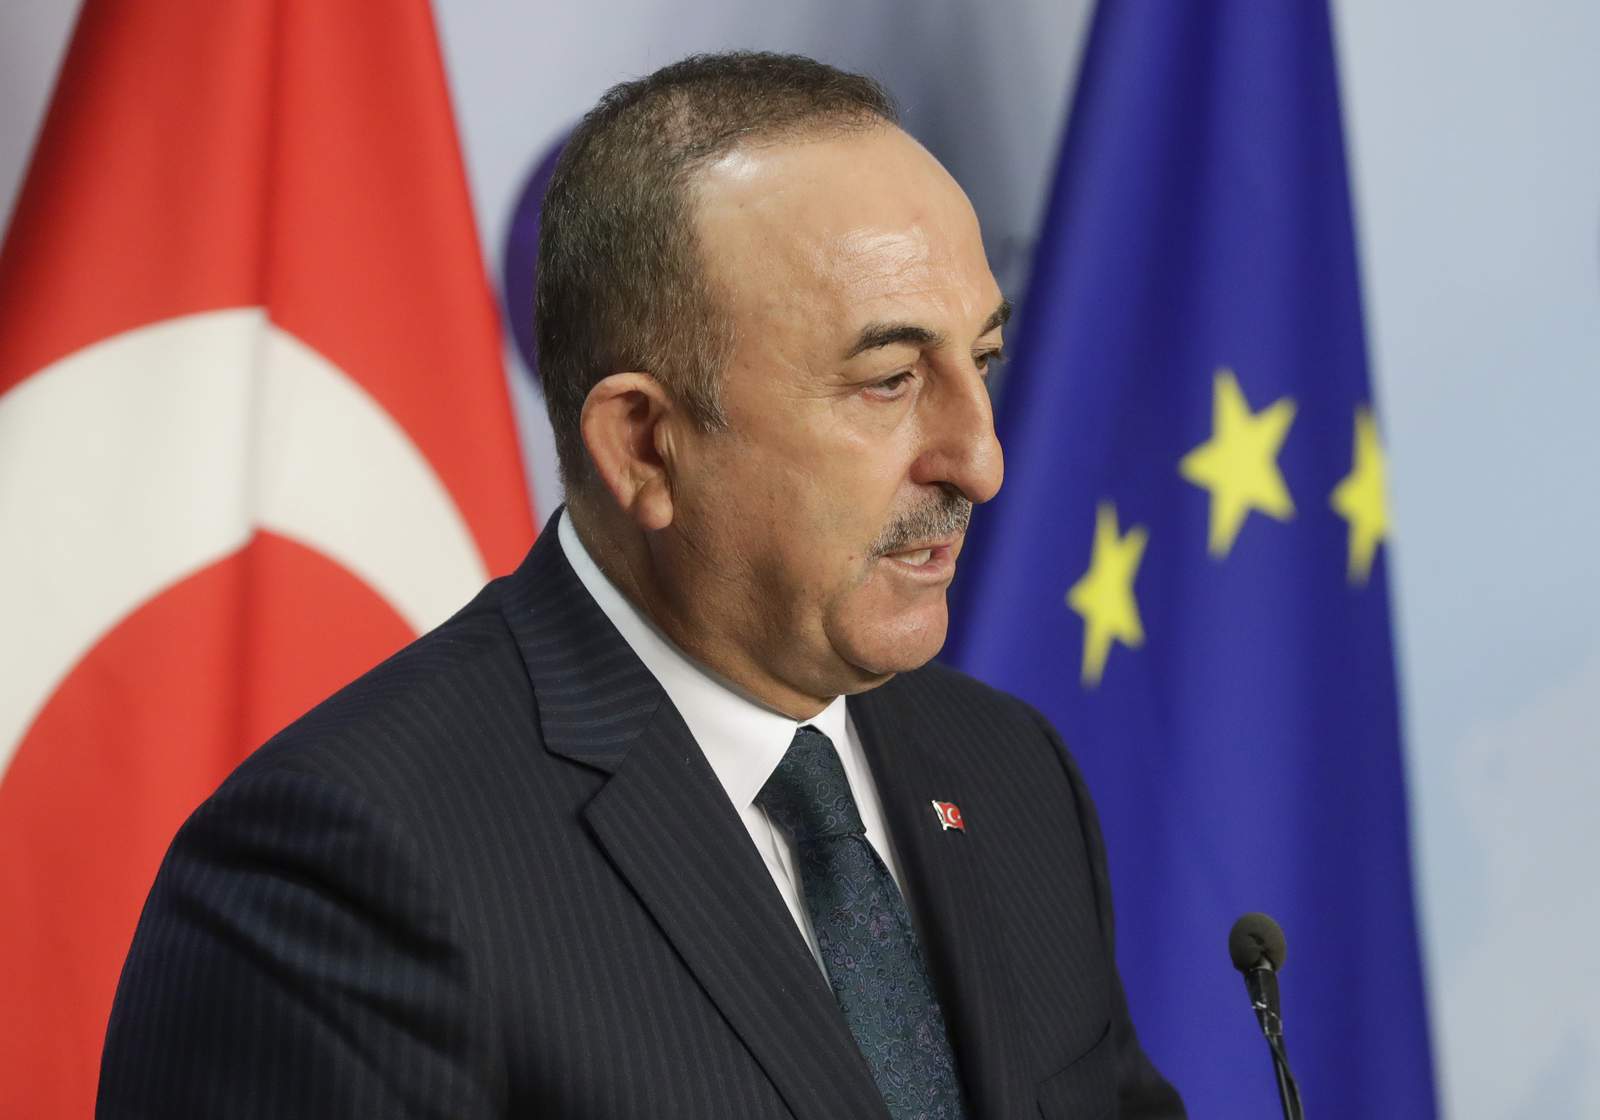 Tentative start to Turkey-Greece talks after year of strife